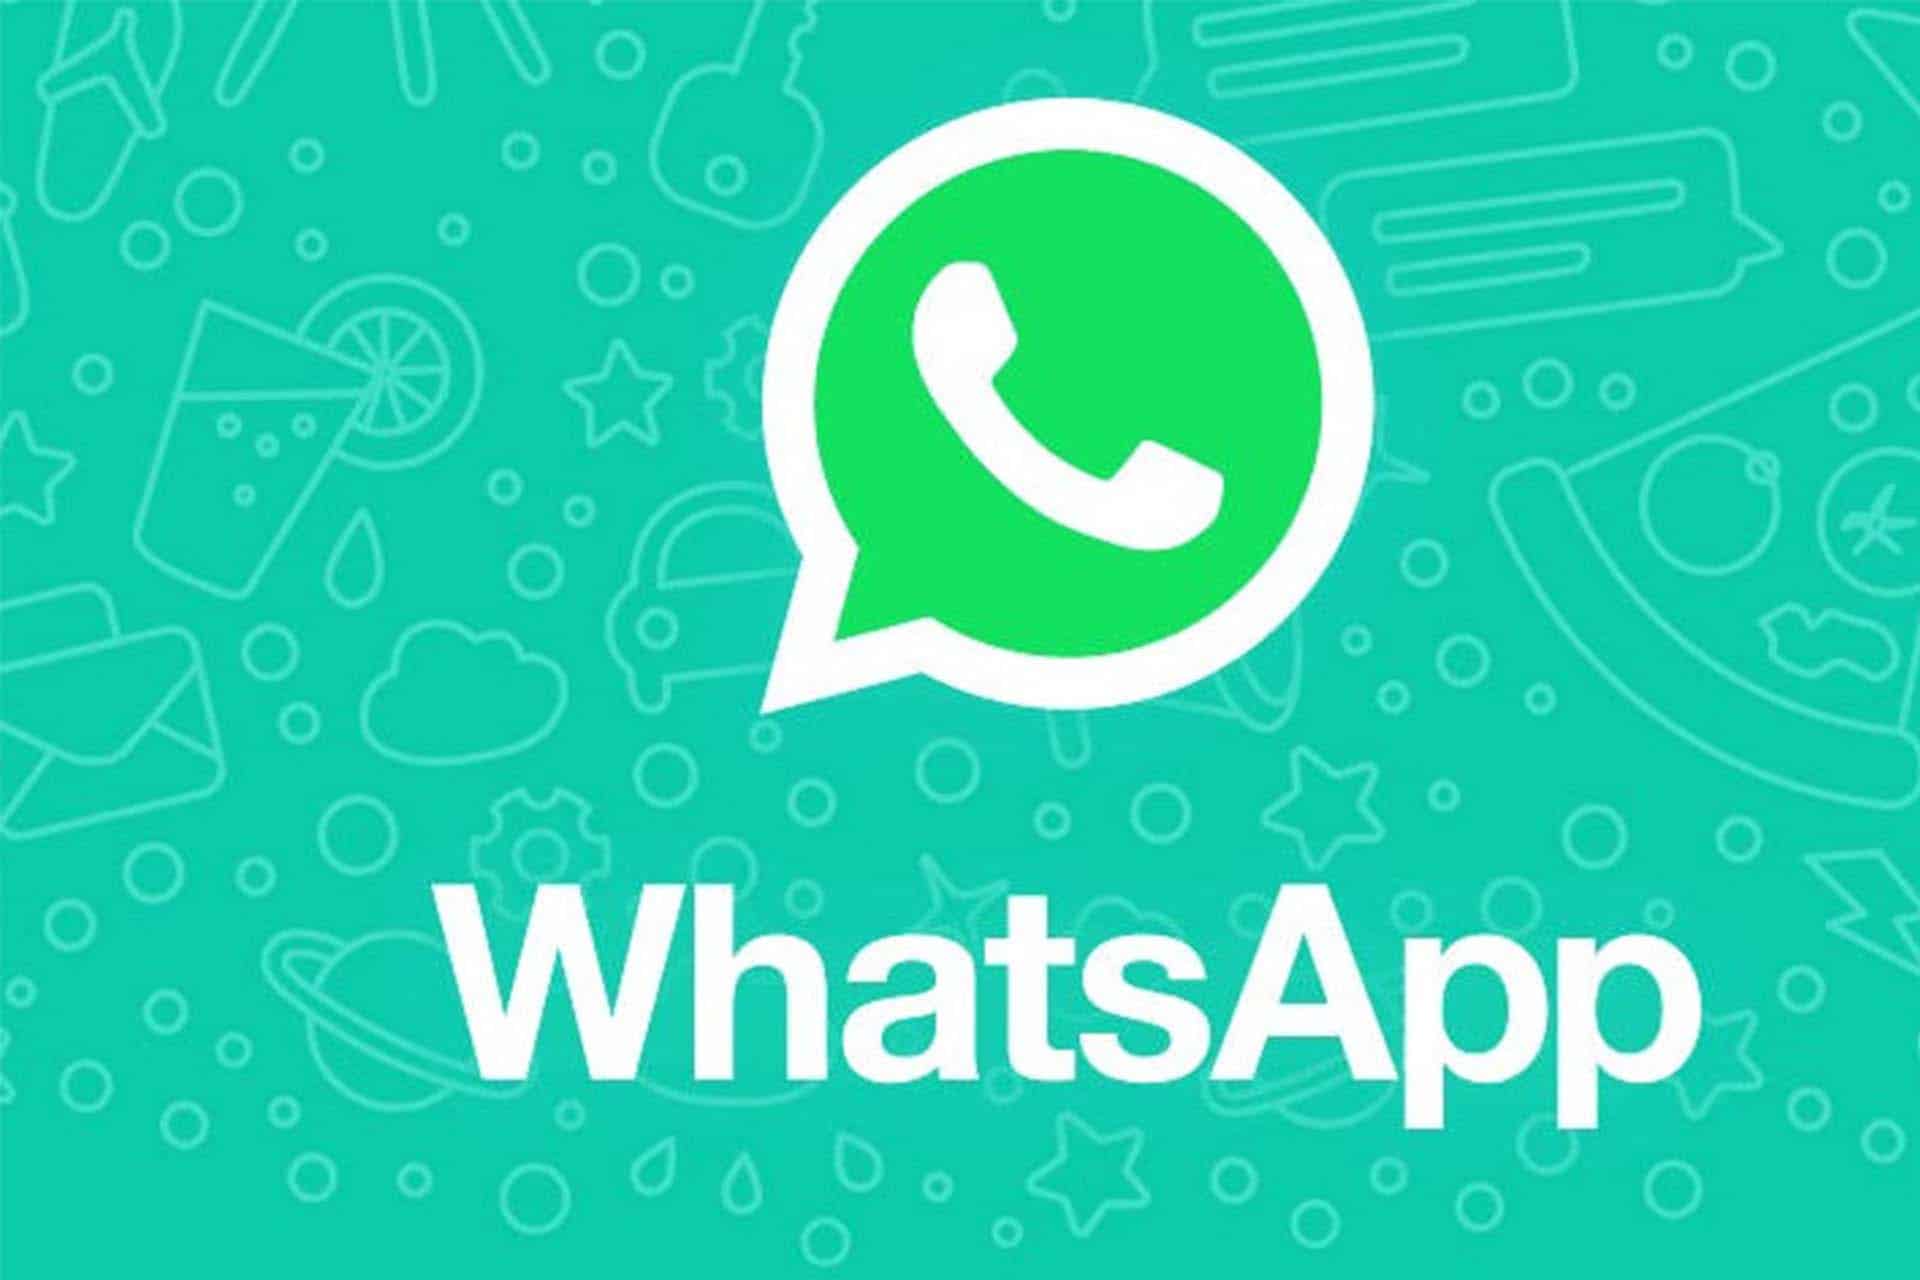 Daftar Ponsel iPhone dan Android Yang Tidak Berfungsi Pada WhatsApp